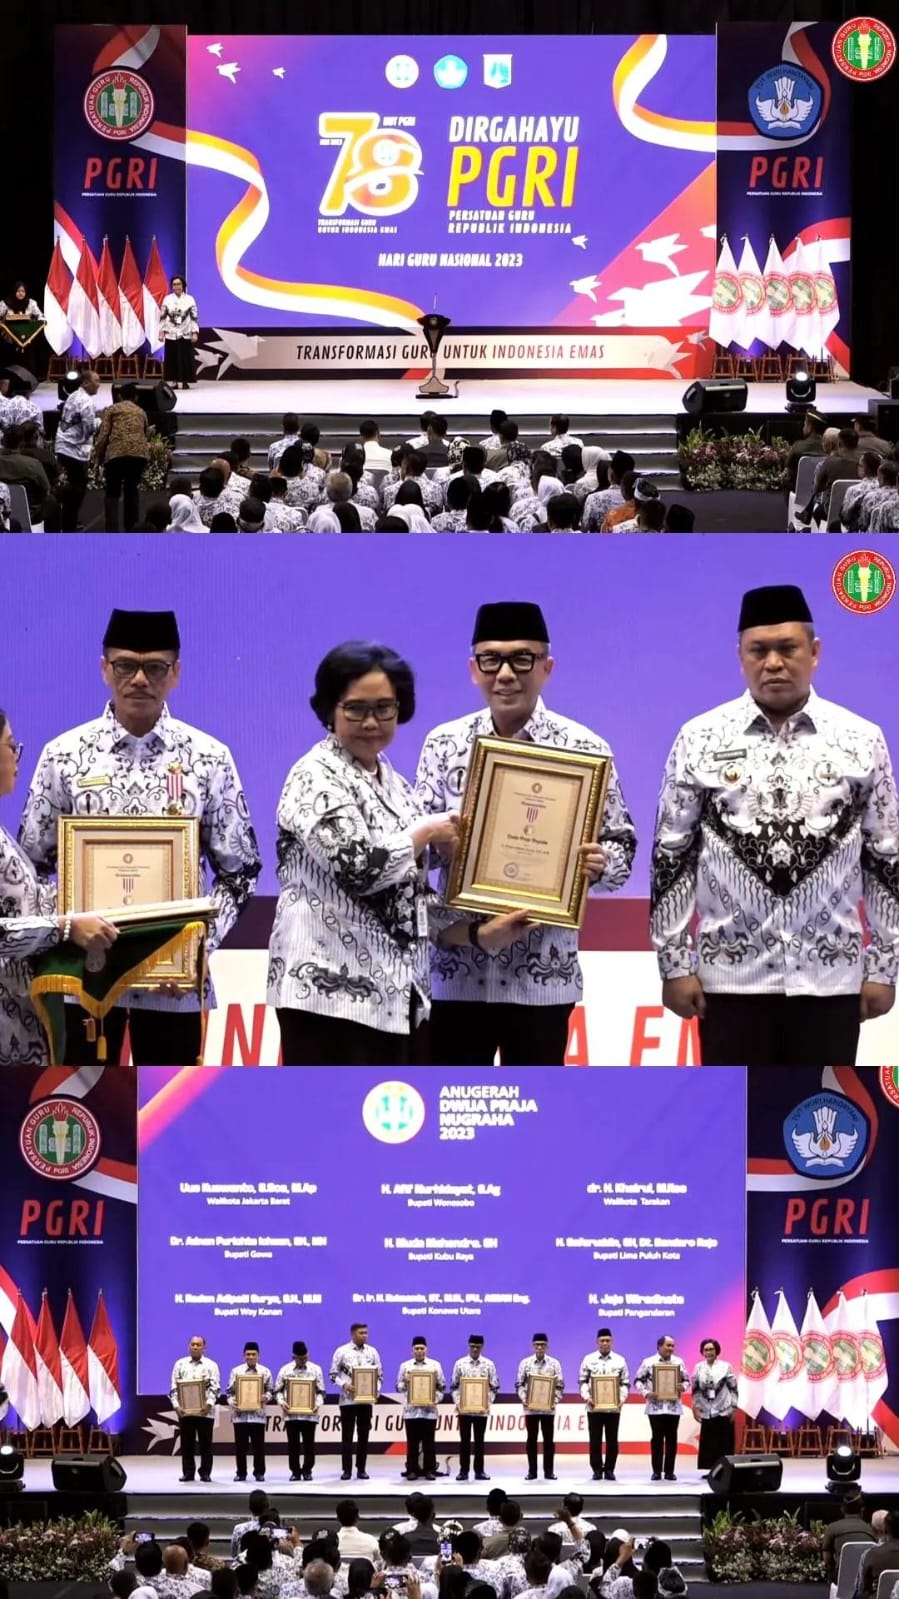 Raden Adipati Surya satu satunya Penerima Anugerah Dwija Praja Nugraha di Propinsi Lampung Sejak PGRI Berdiri 78 Tahun lalu